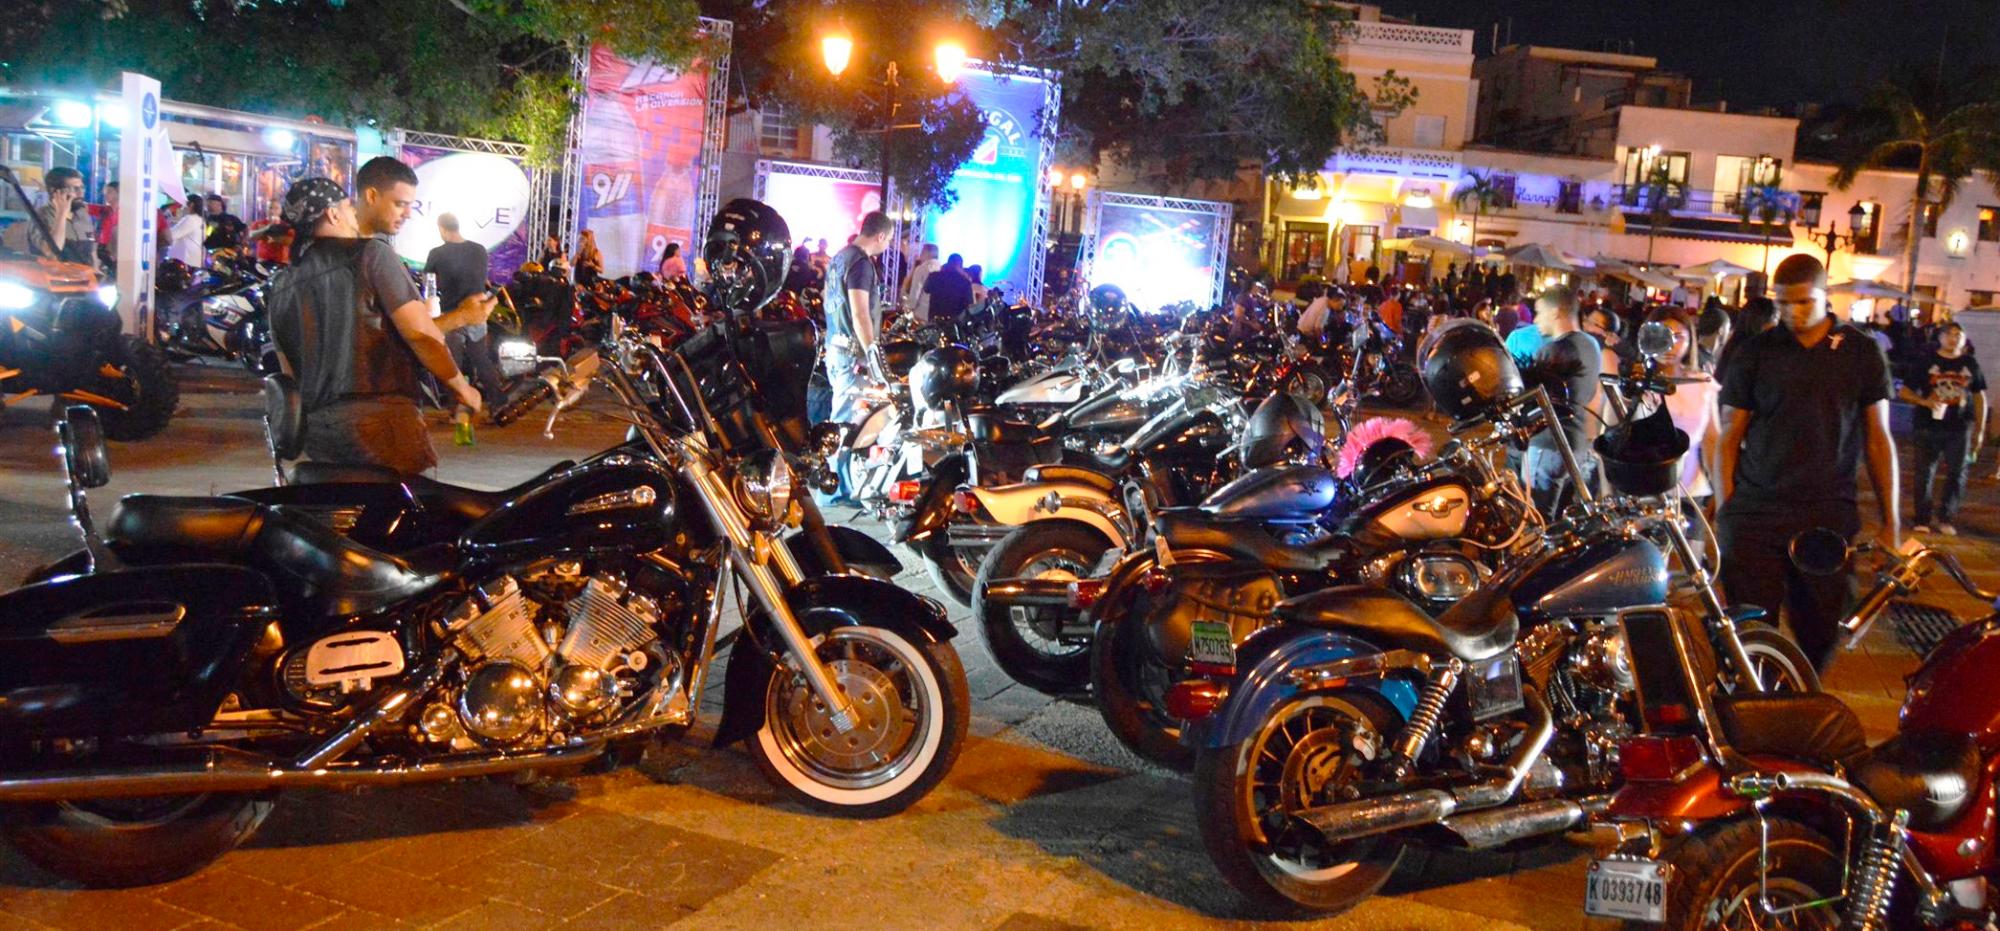 16 aniversario de “Nativos MC Santo Domingo 16 Bike Fest” - Diario Libre